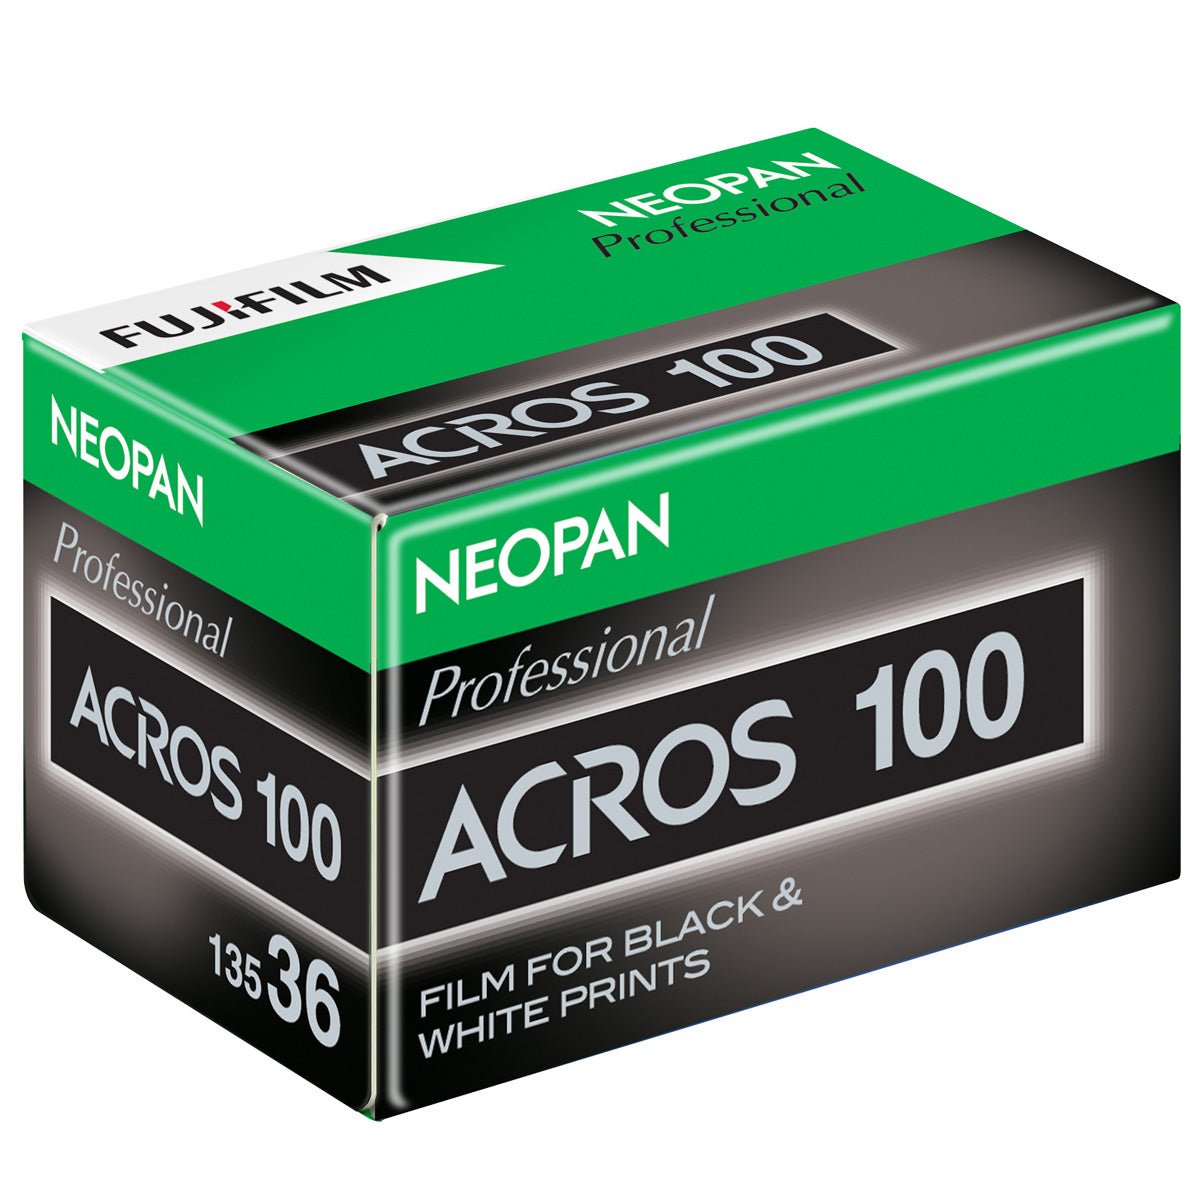 Fujifilm Neopan 100 135-36 Acros Black and White Negative Film (One Roll)